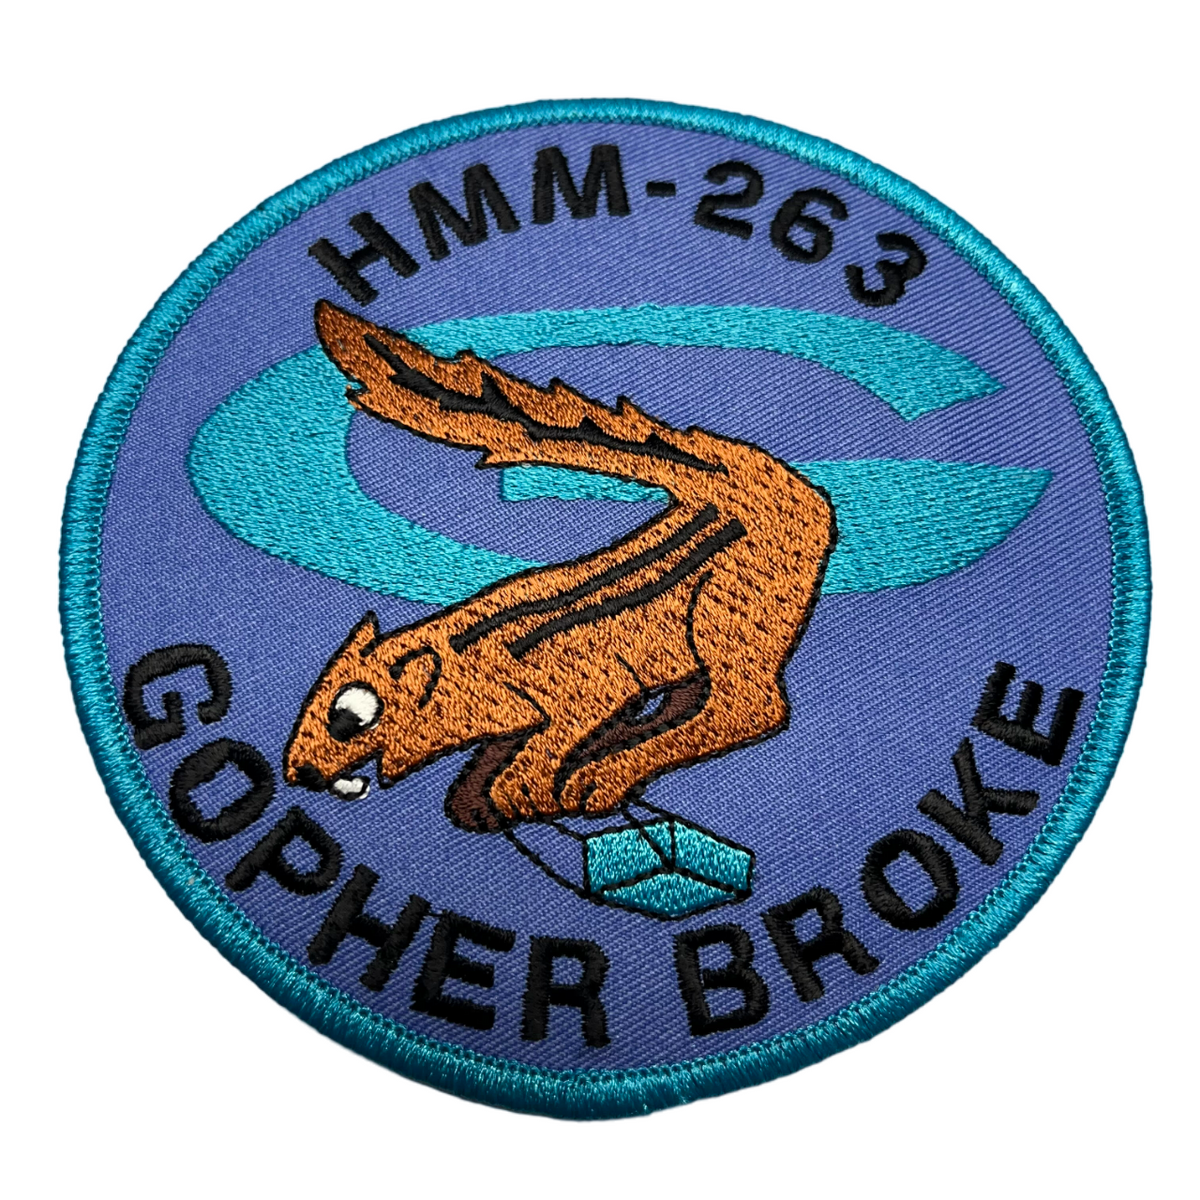 HMM-263 Gopher Broke - Sew-On Patch